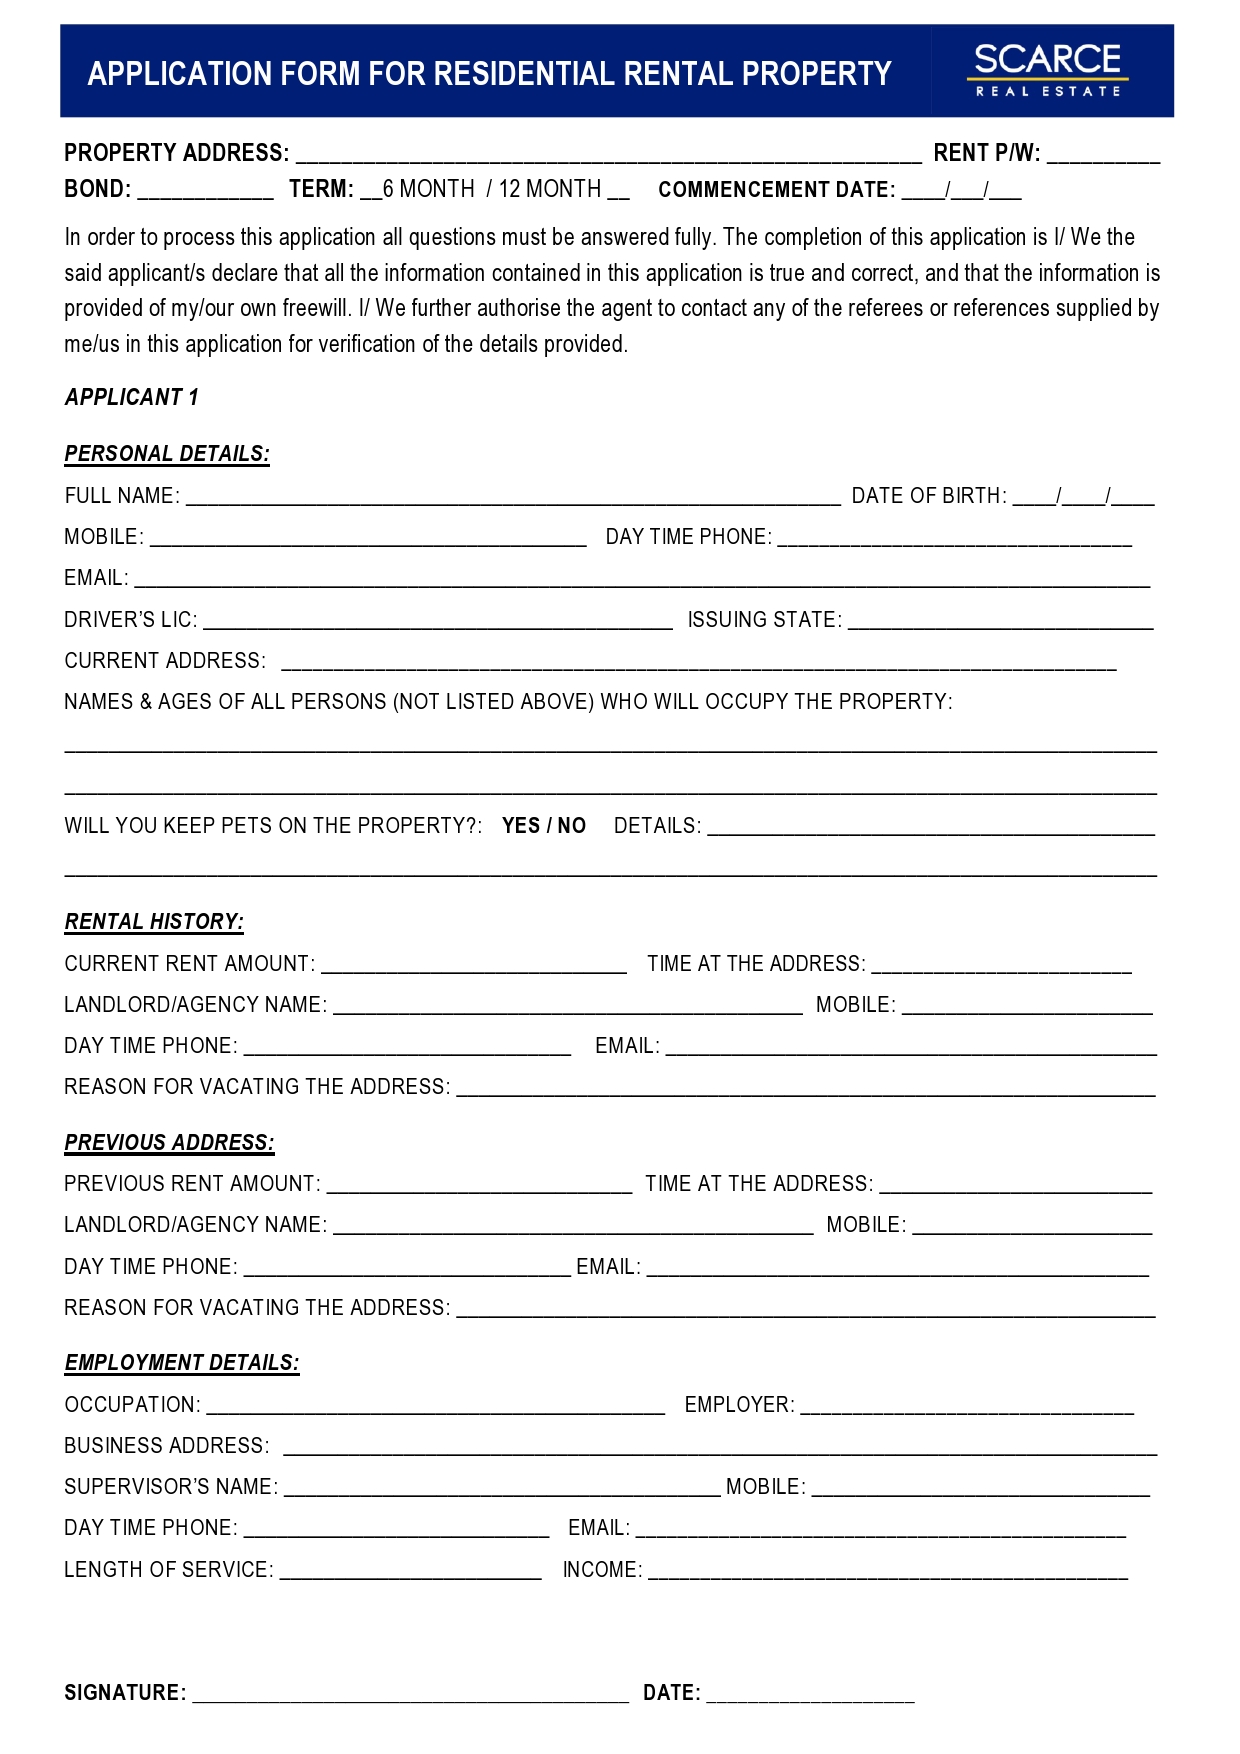 Free rental application form 29